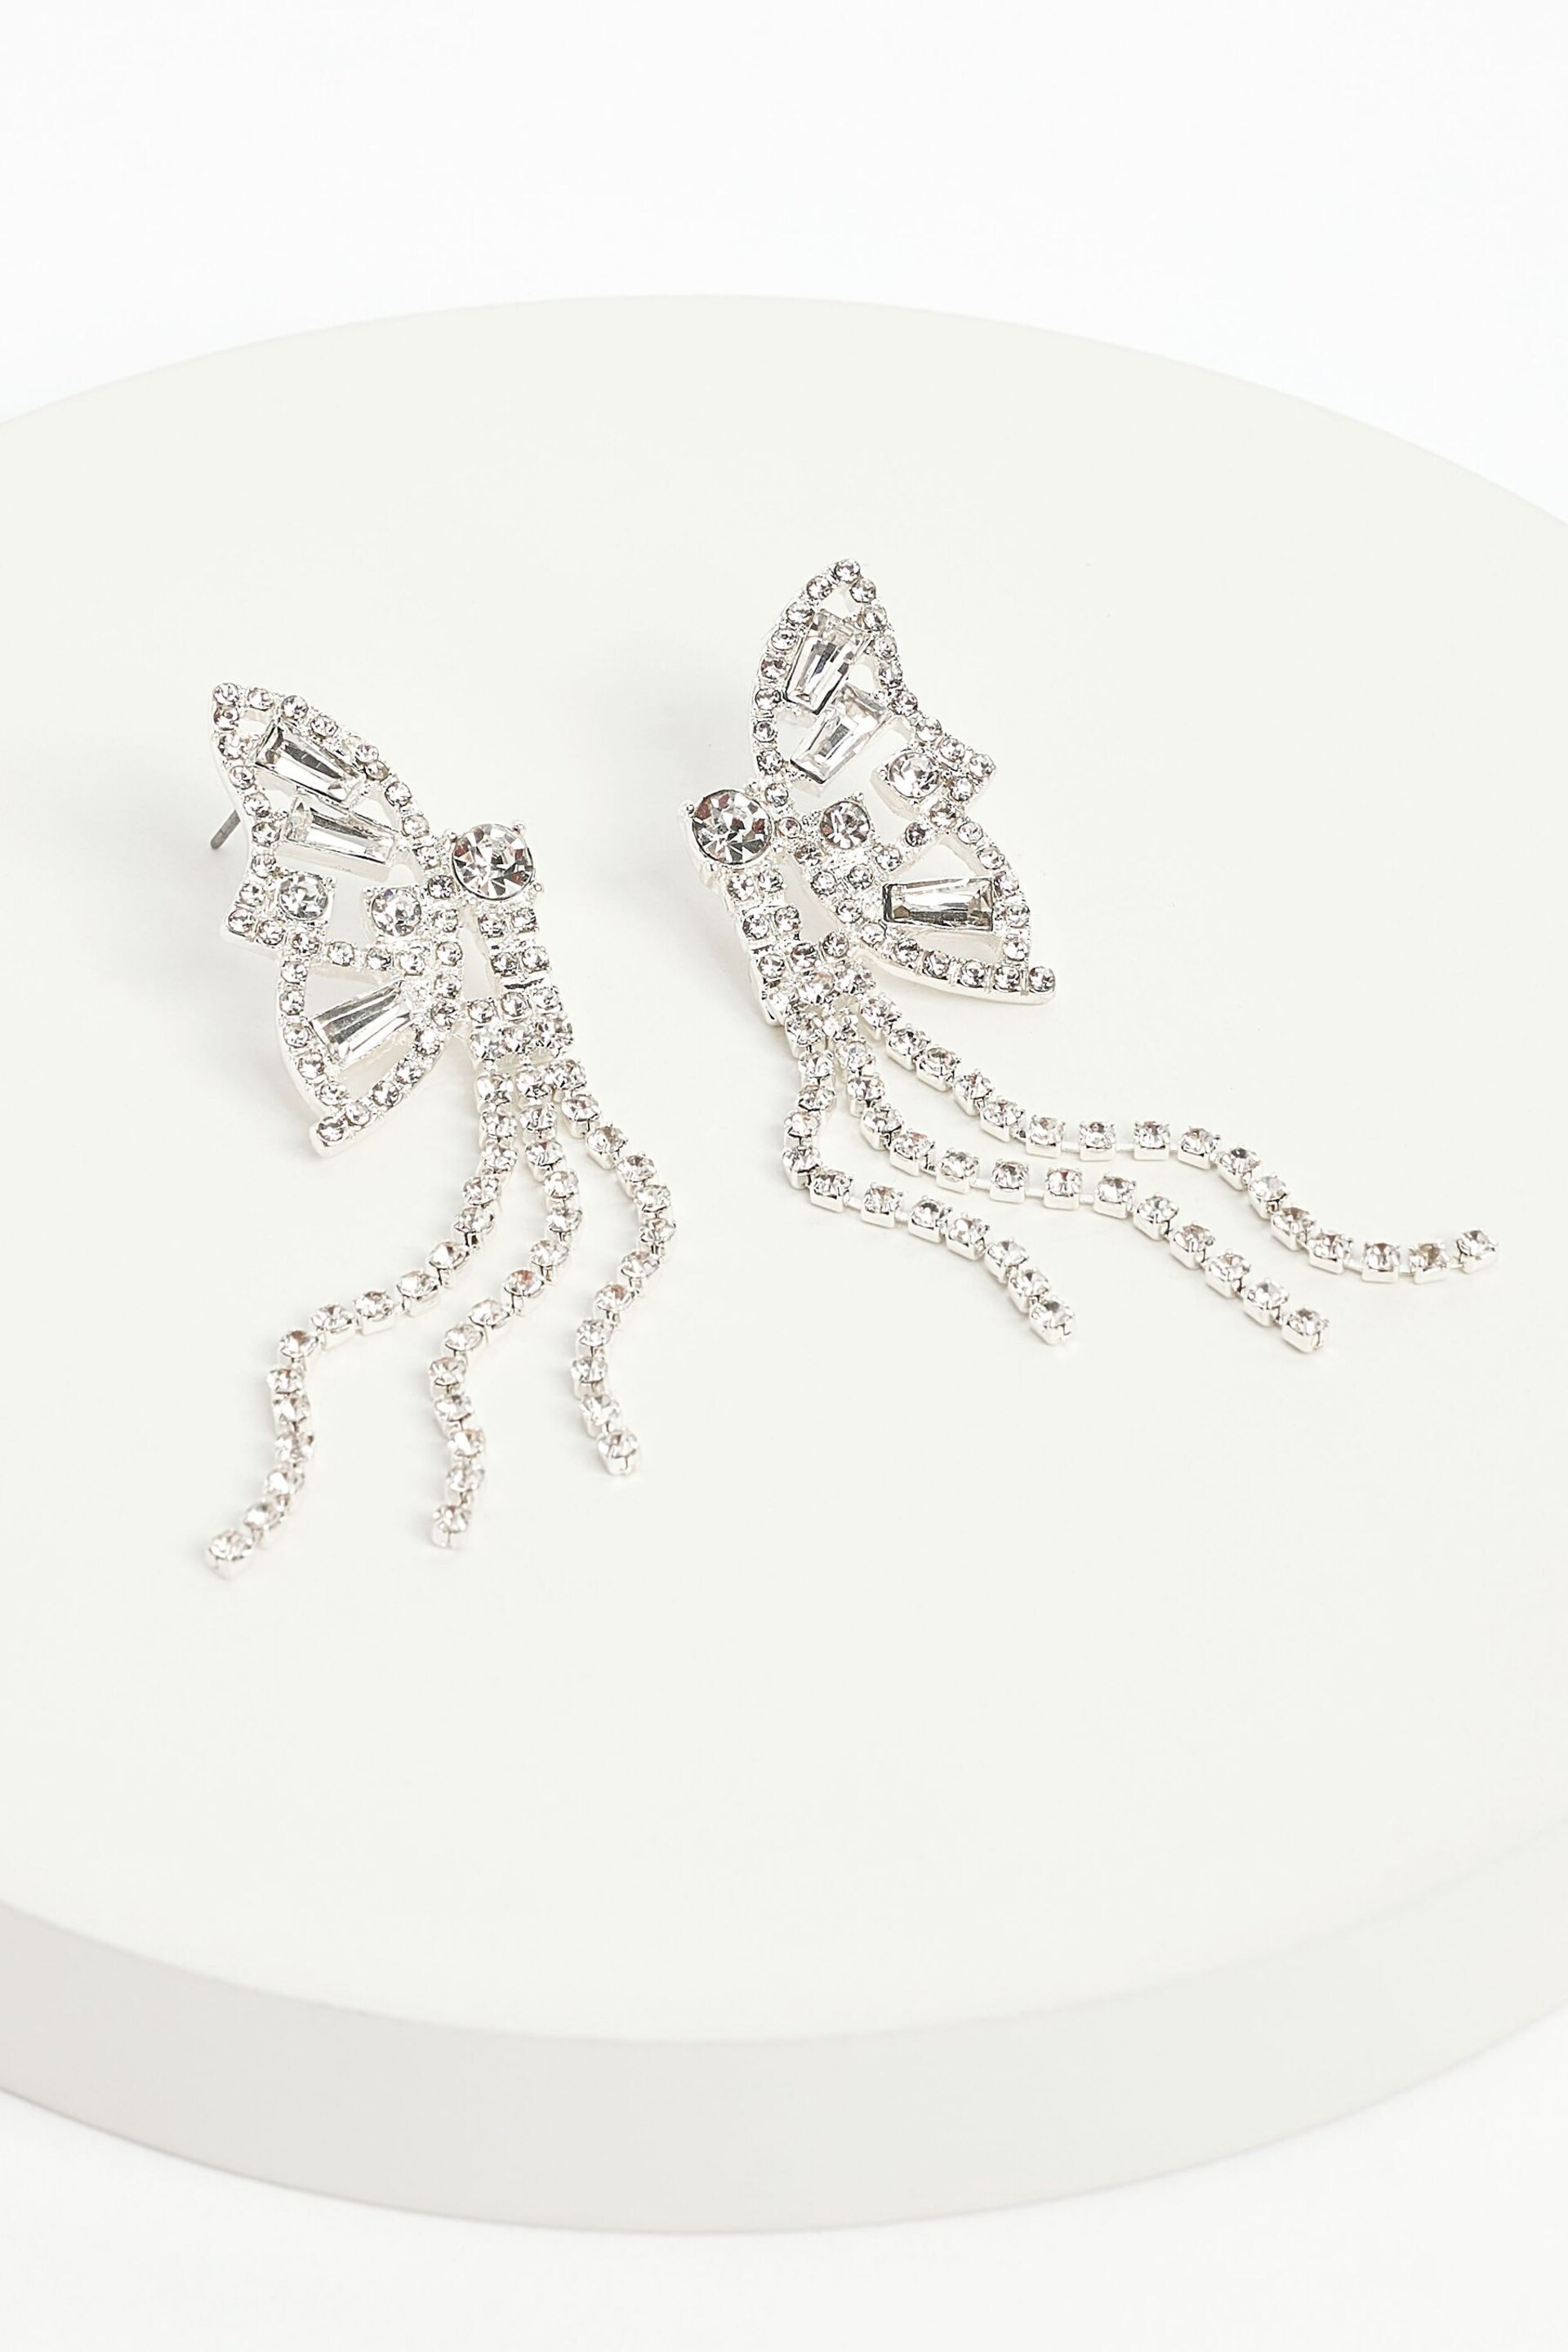 Lipsy Jewellery Silver Tone Crystal Statement Butterfly Earrings - Image 1 of 2